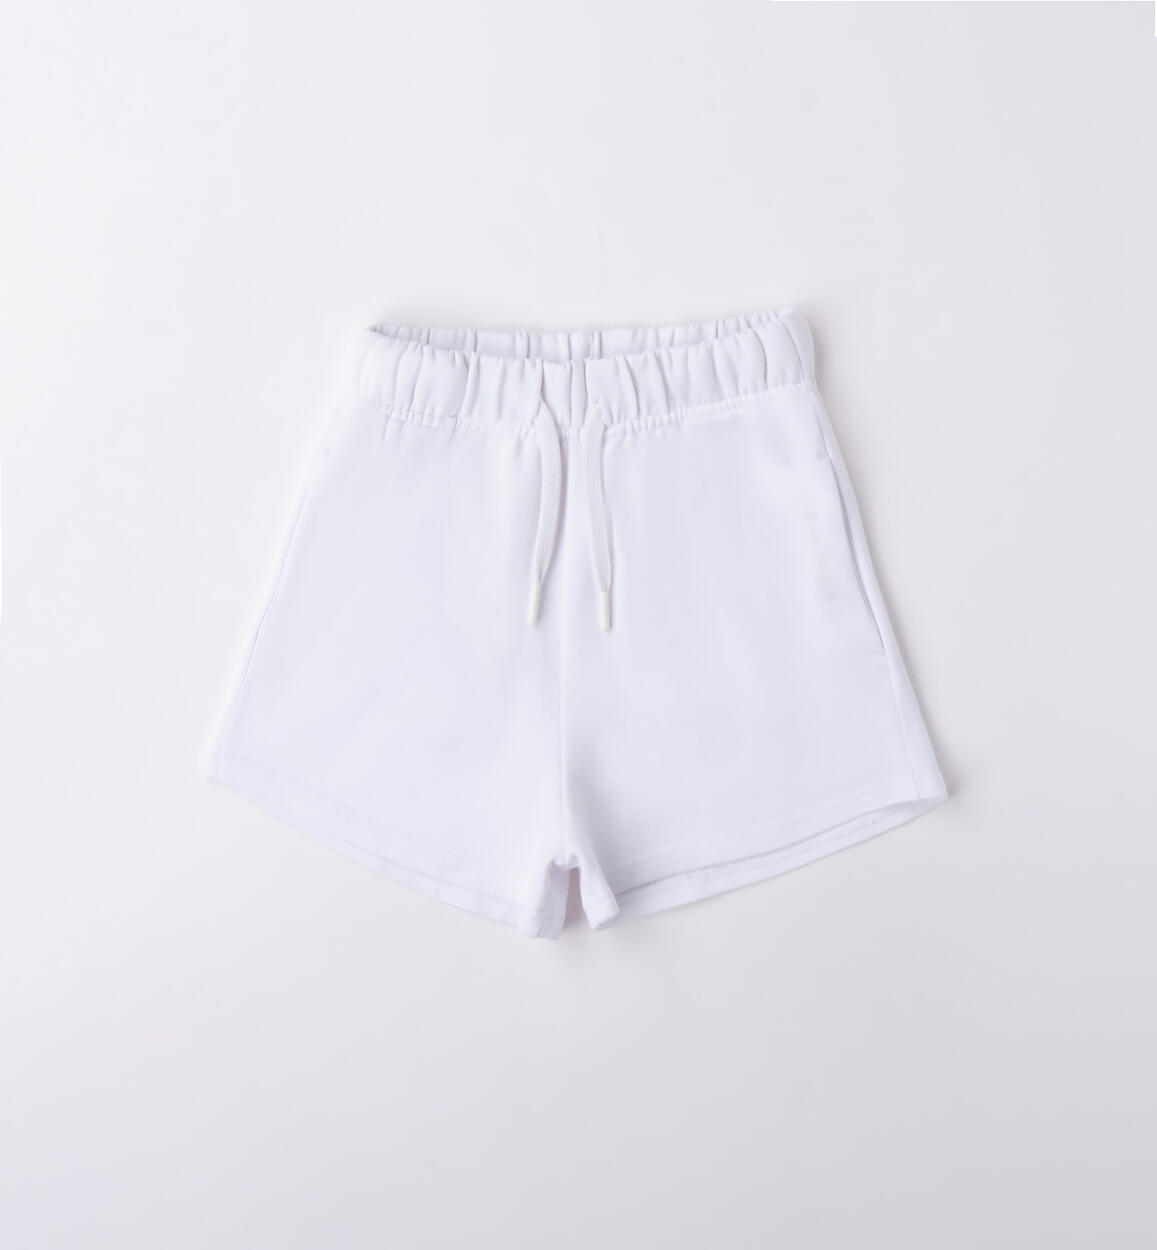 Pantalone corto 100% cotone bambina Superga BIANCO SUPERGA